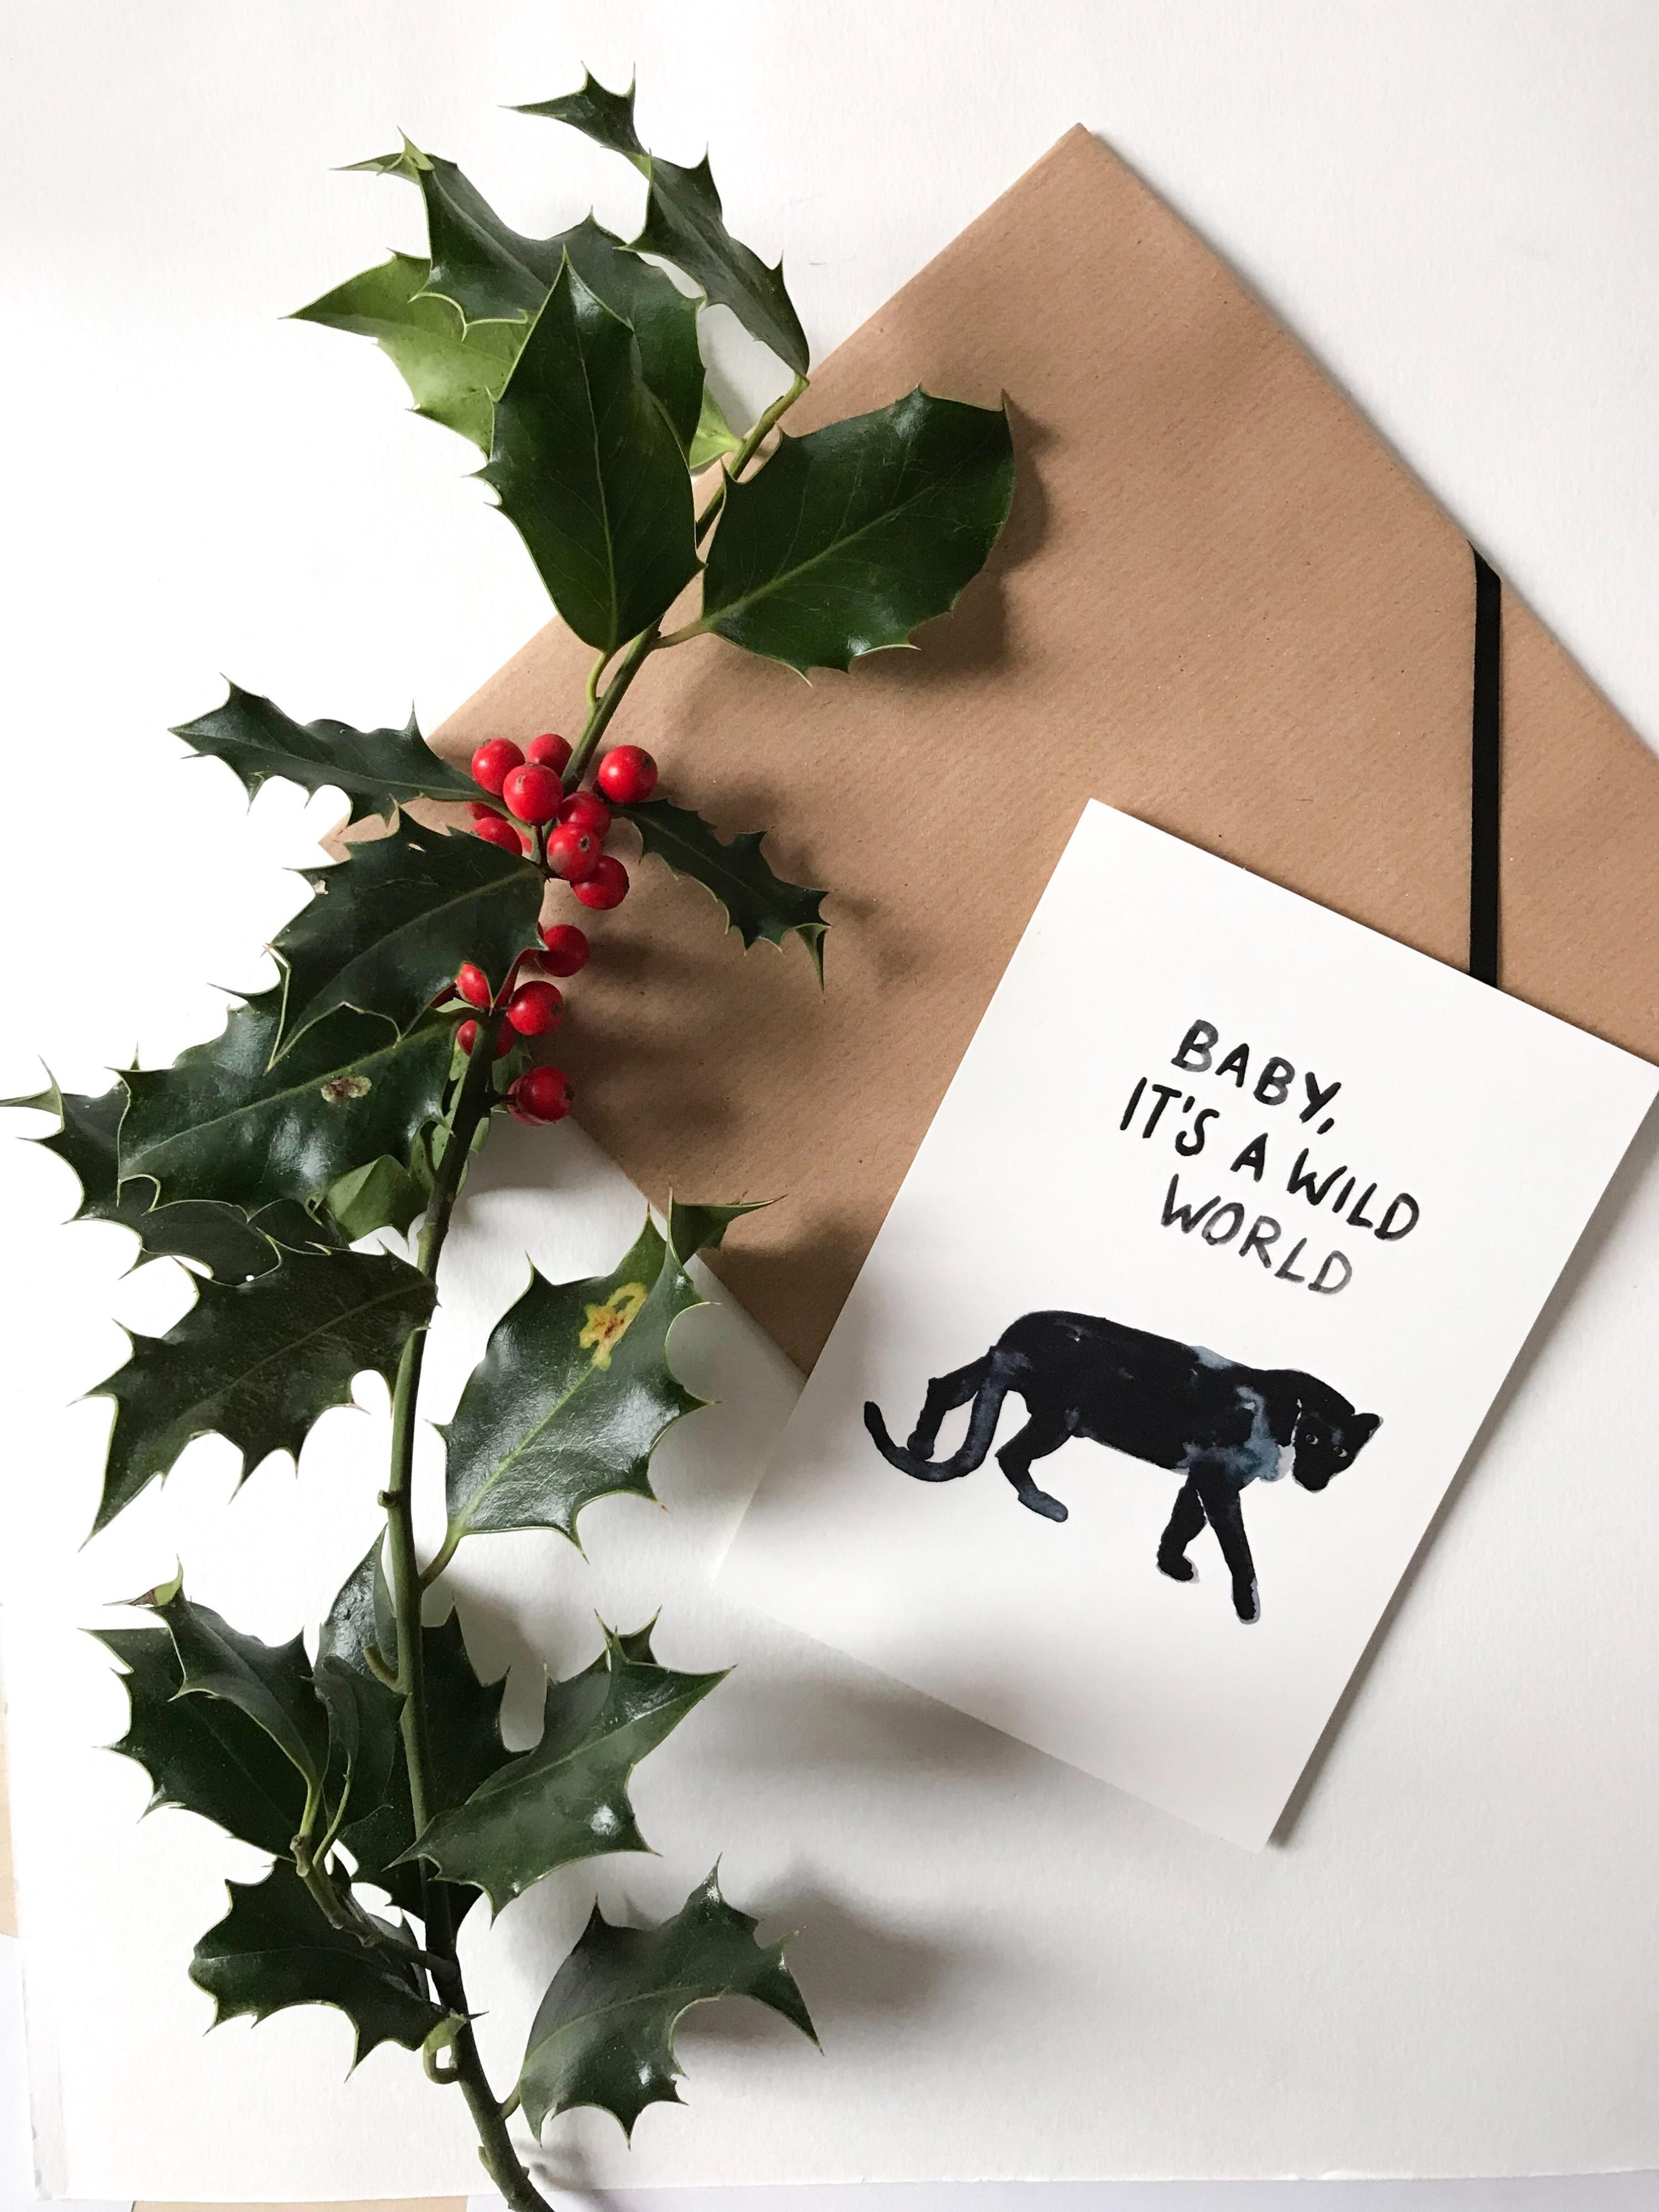 CHRISTMAS IS COMIN‘ 🌲
#christmas#weihnachtsdeko#COUCHmagazin#interior#home#simplicity#minimalism#geschenke#paper